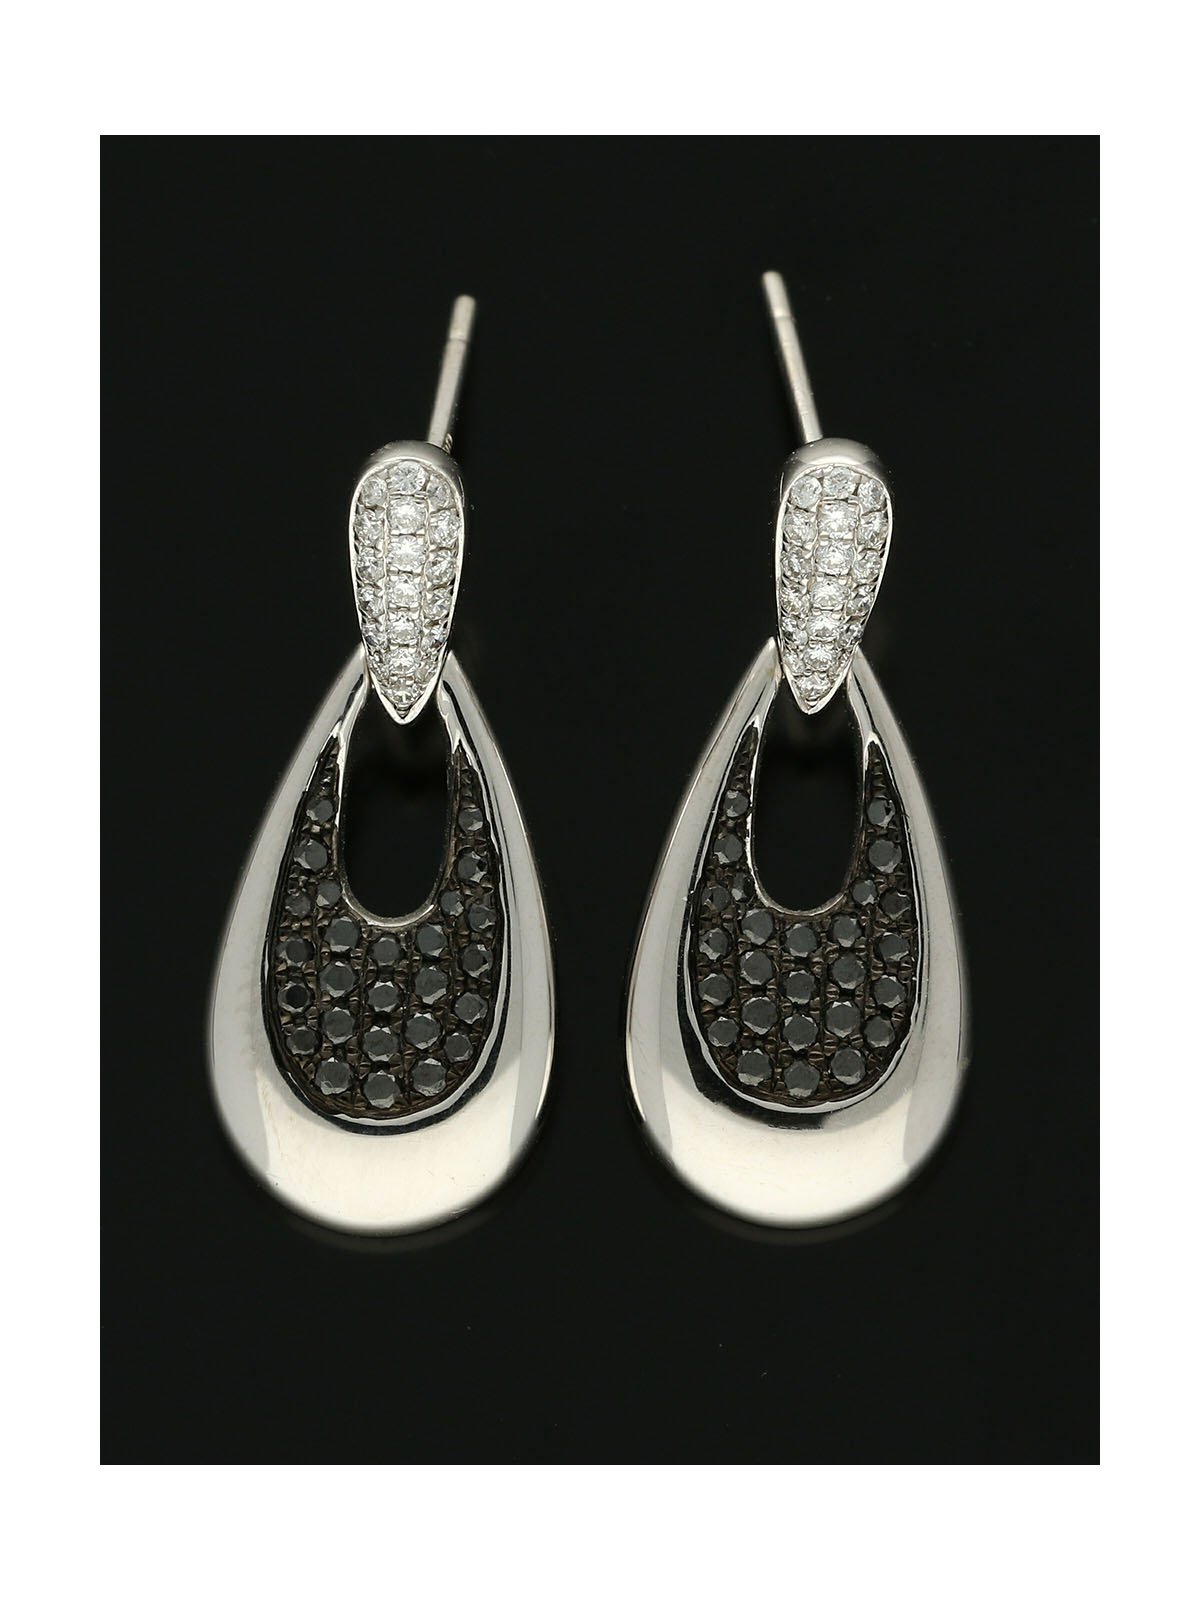 Black & White Diamond Drop Earrings 0.52ct in 18ct White Gold 